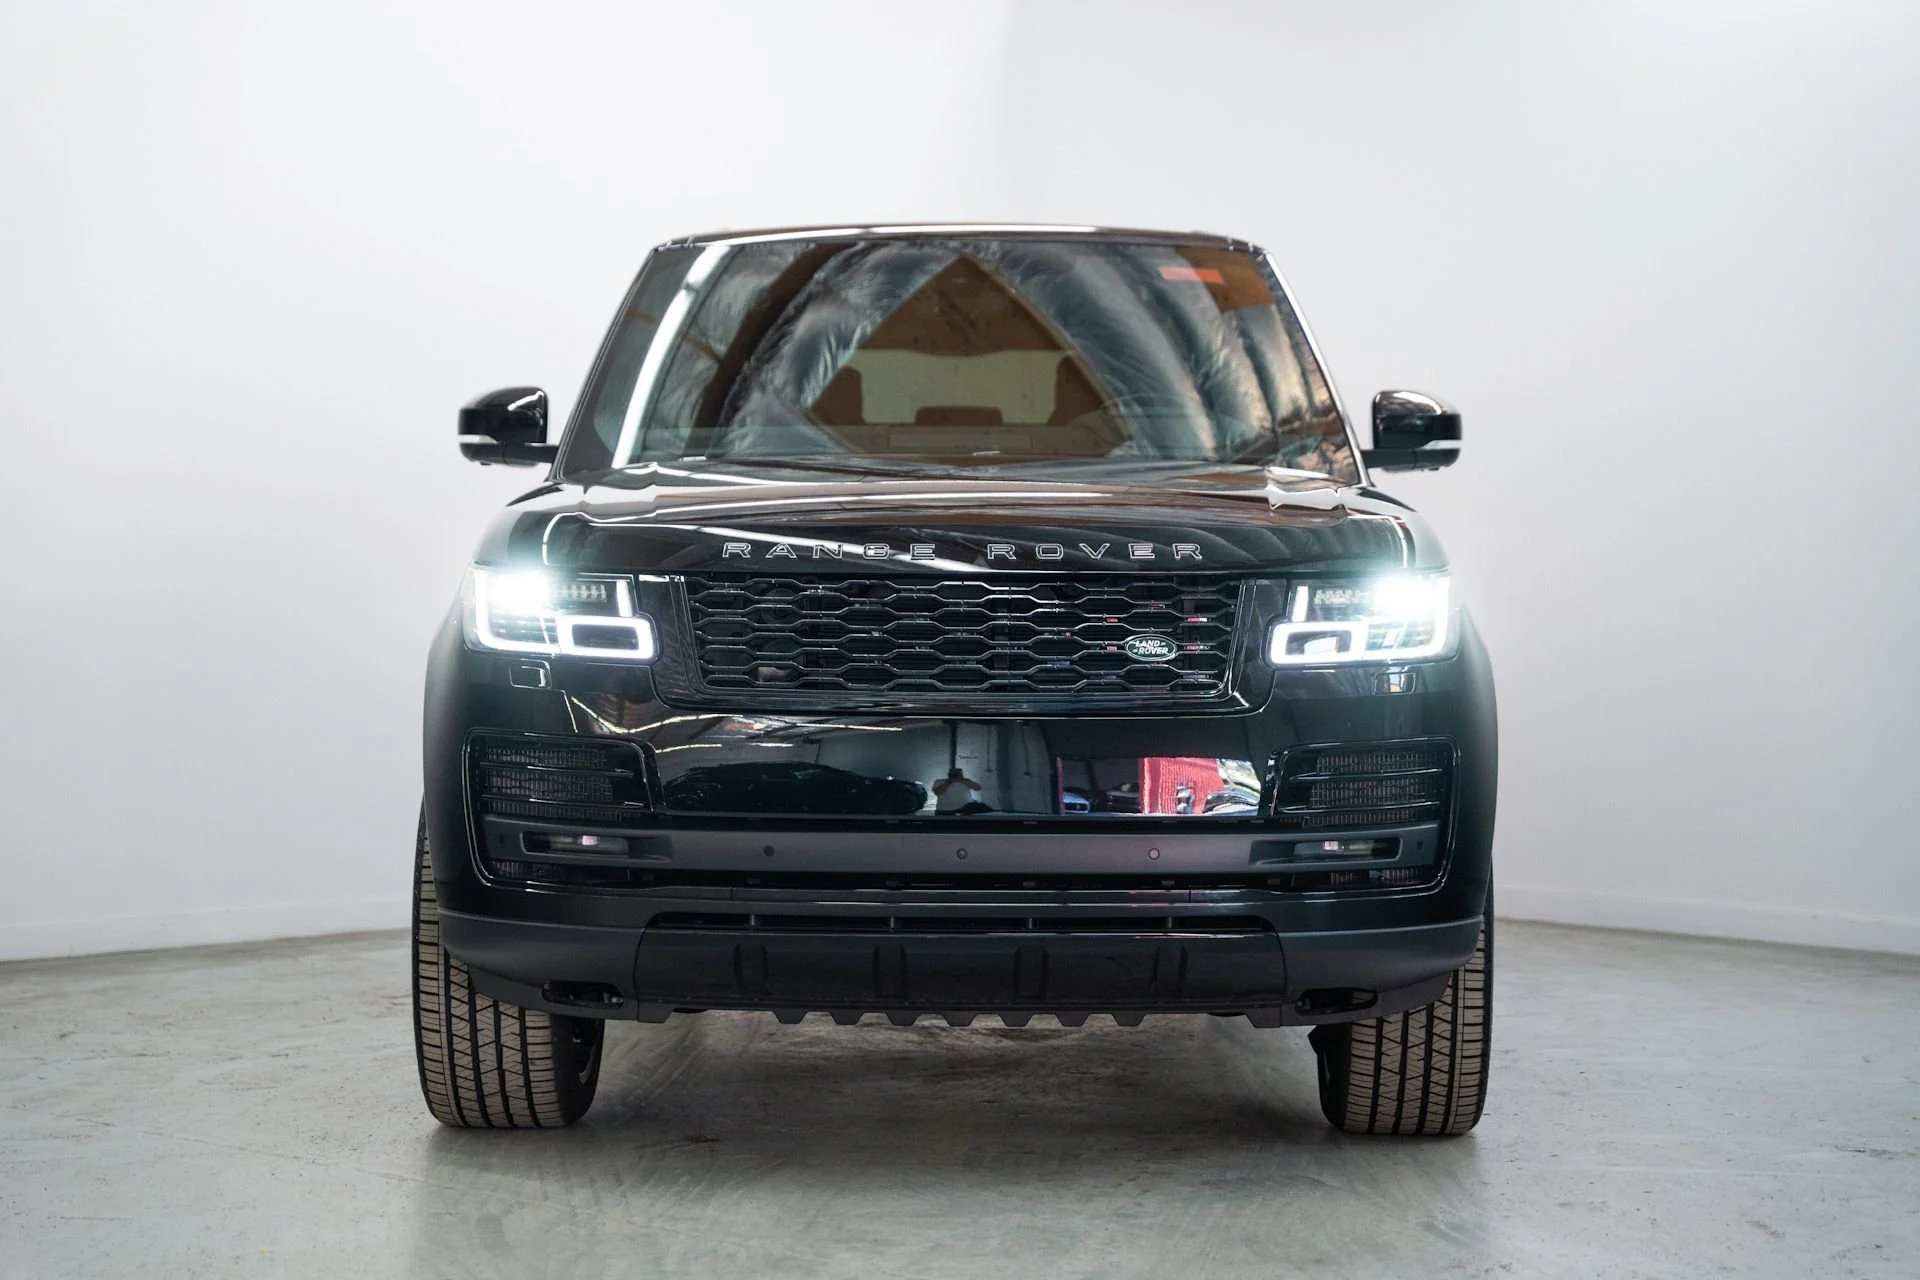 2021 Range Rover SV AUTOBIOGRAPHY DYNAMIC BLACK SWB suv (1)